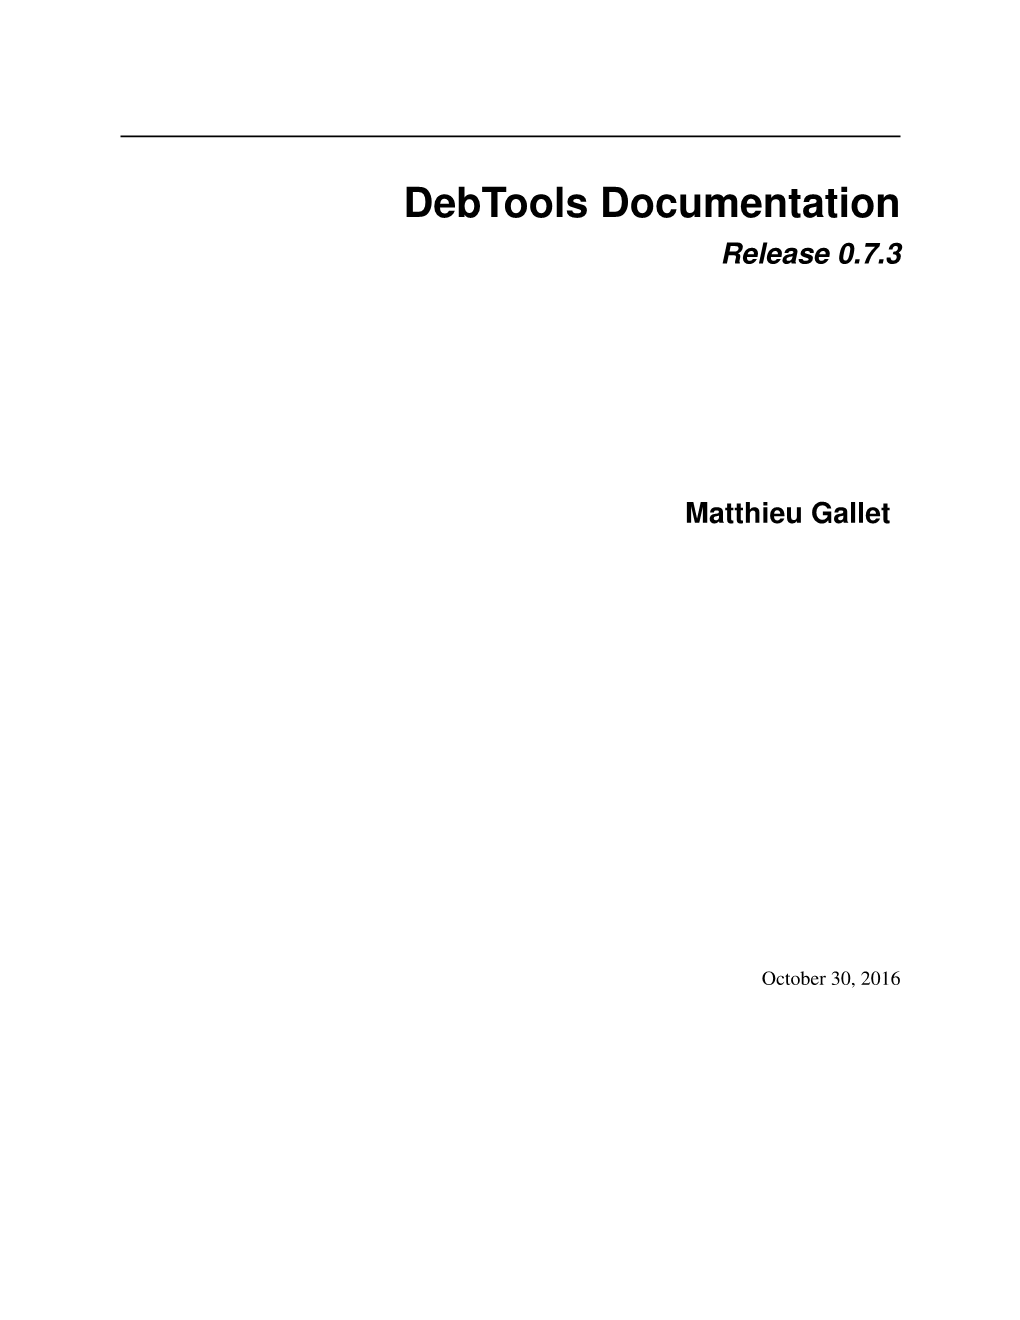 Debtools Documentation Release 0.7.3